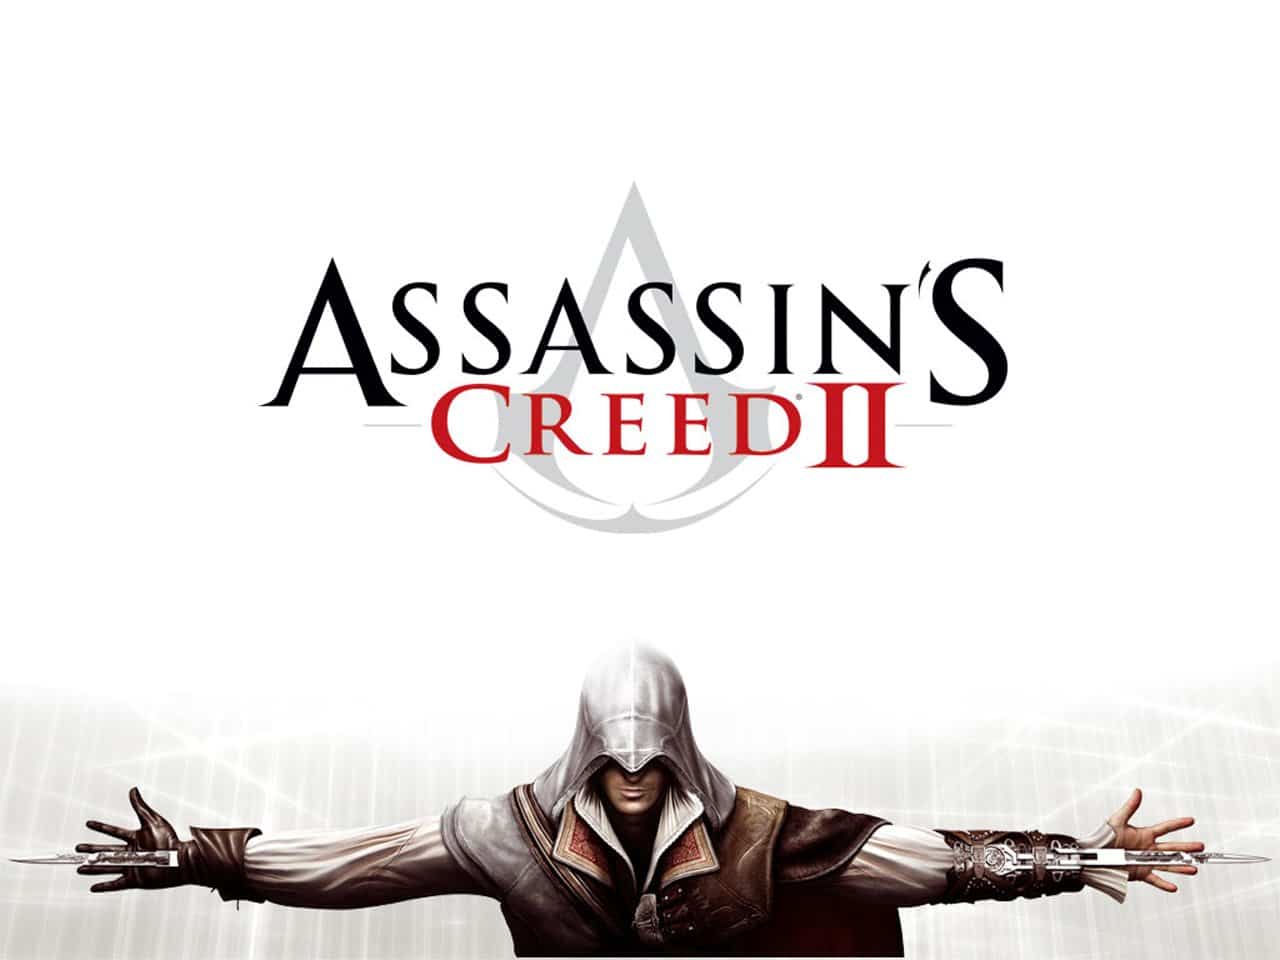 Assasın creed 2. Ассасин Крид 2. Assassin's Creed 2 обложка. Ассасин Крид 2 обложка. Assassins Creed 2 Deluxe Edition.